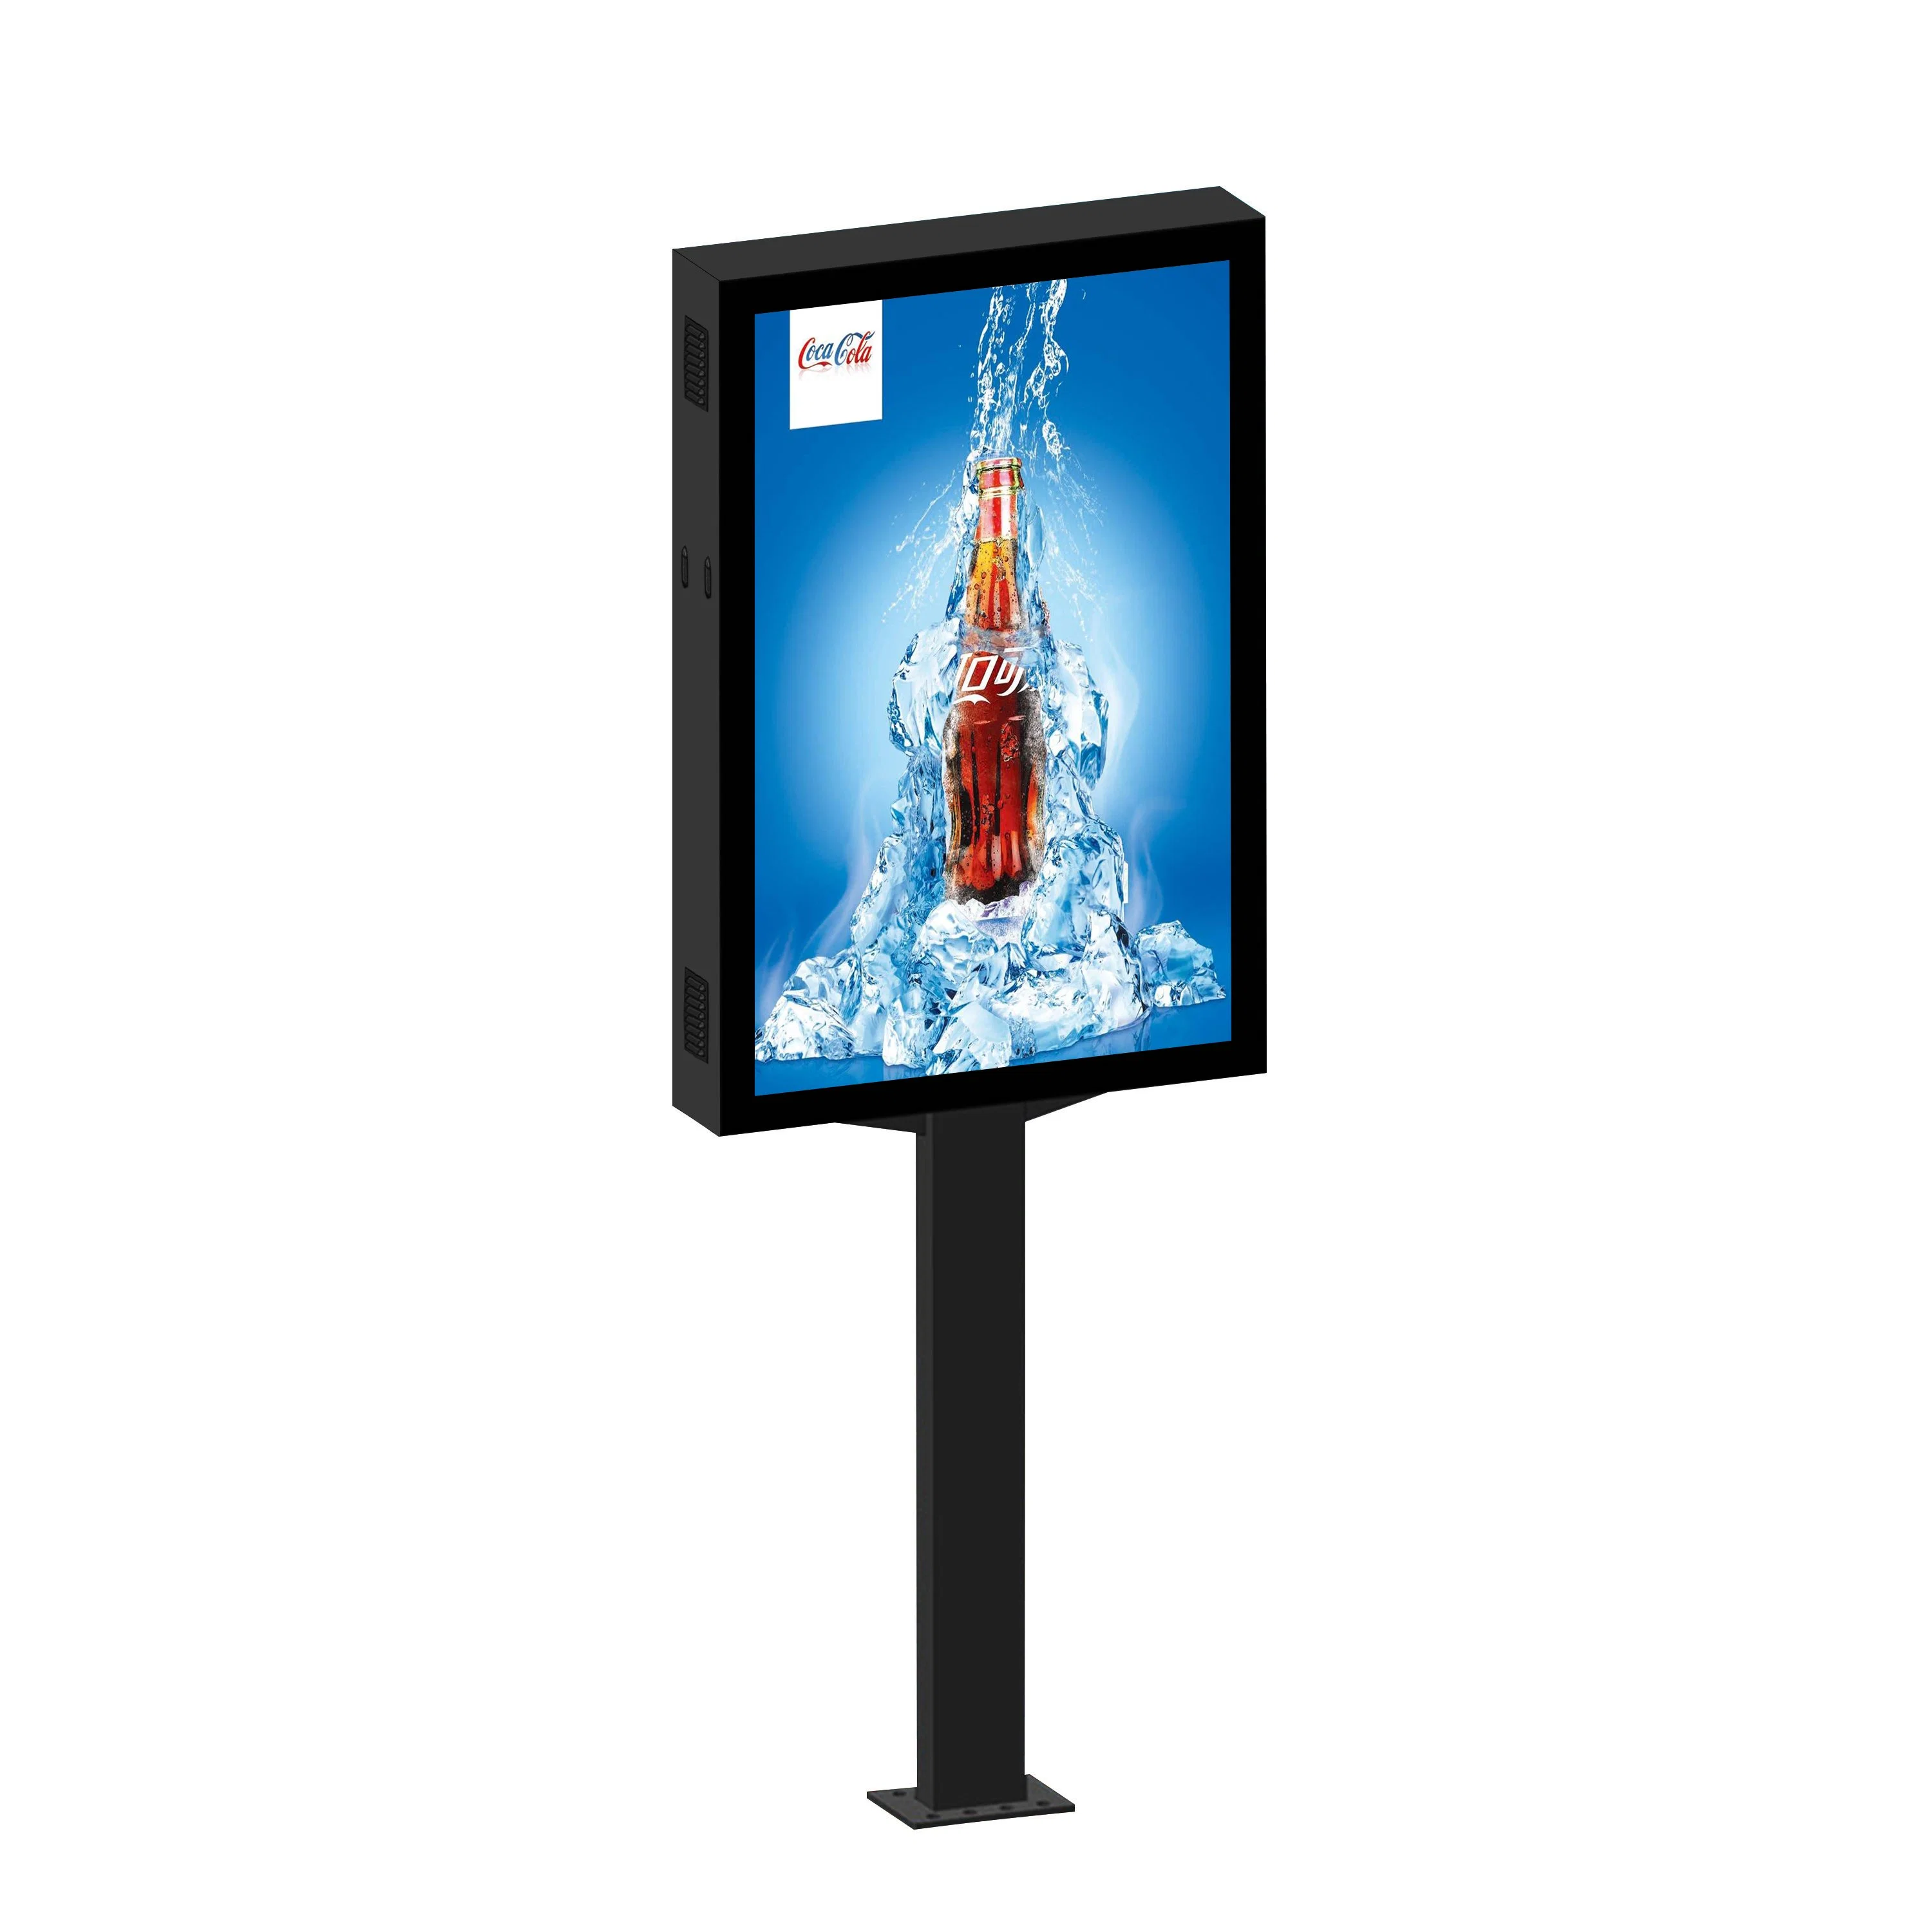 Full Color LED Outdoor-Werbung Bildschirm Display mit Stahlstruktur